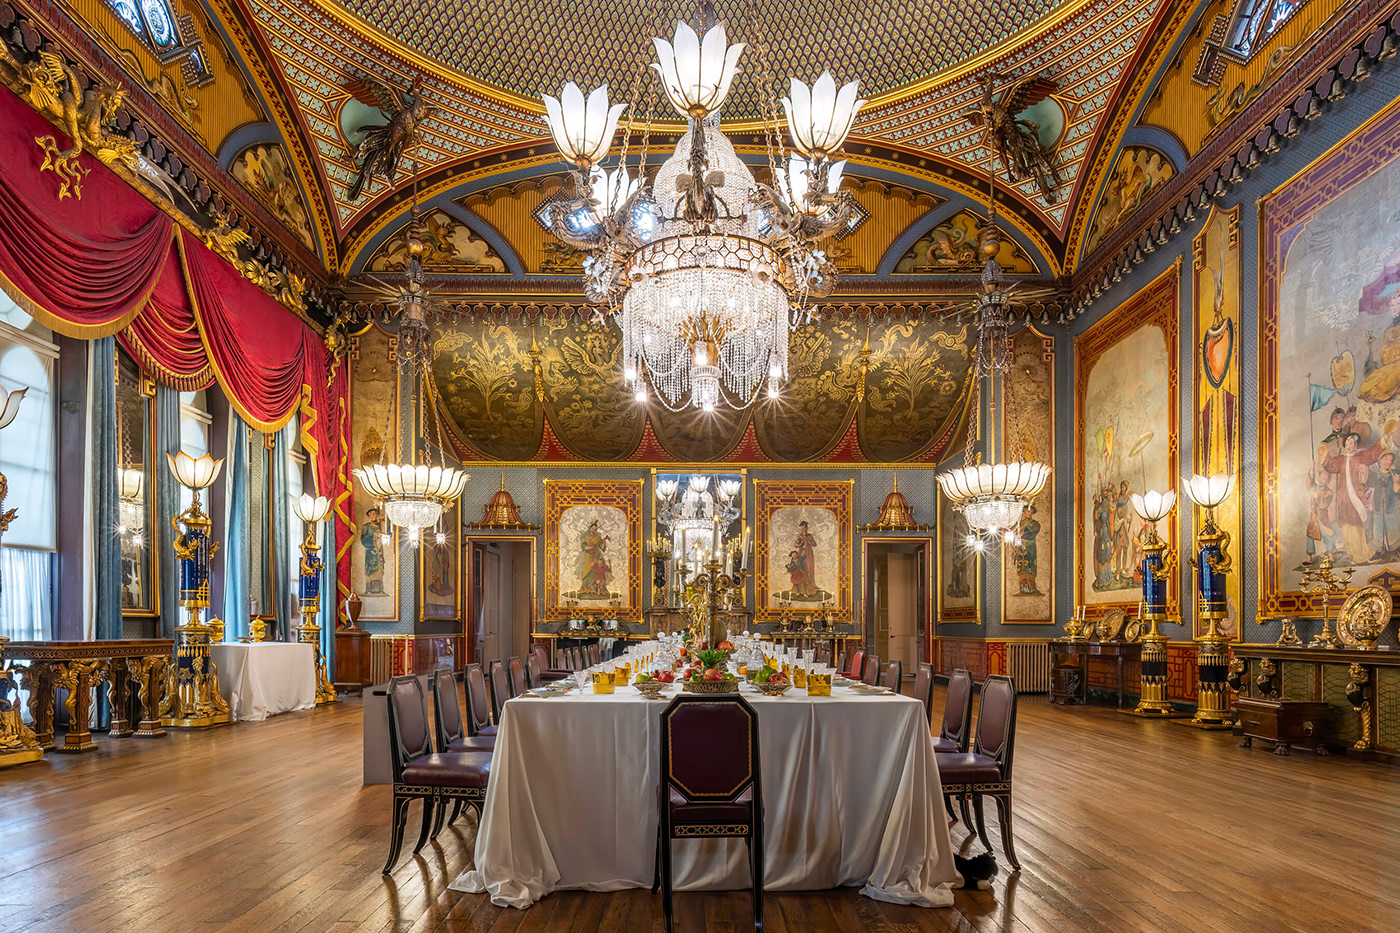 brighton Photography  interior design  Interior palace luxury heritage Royal Pavilion stately home